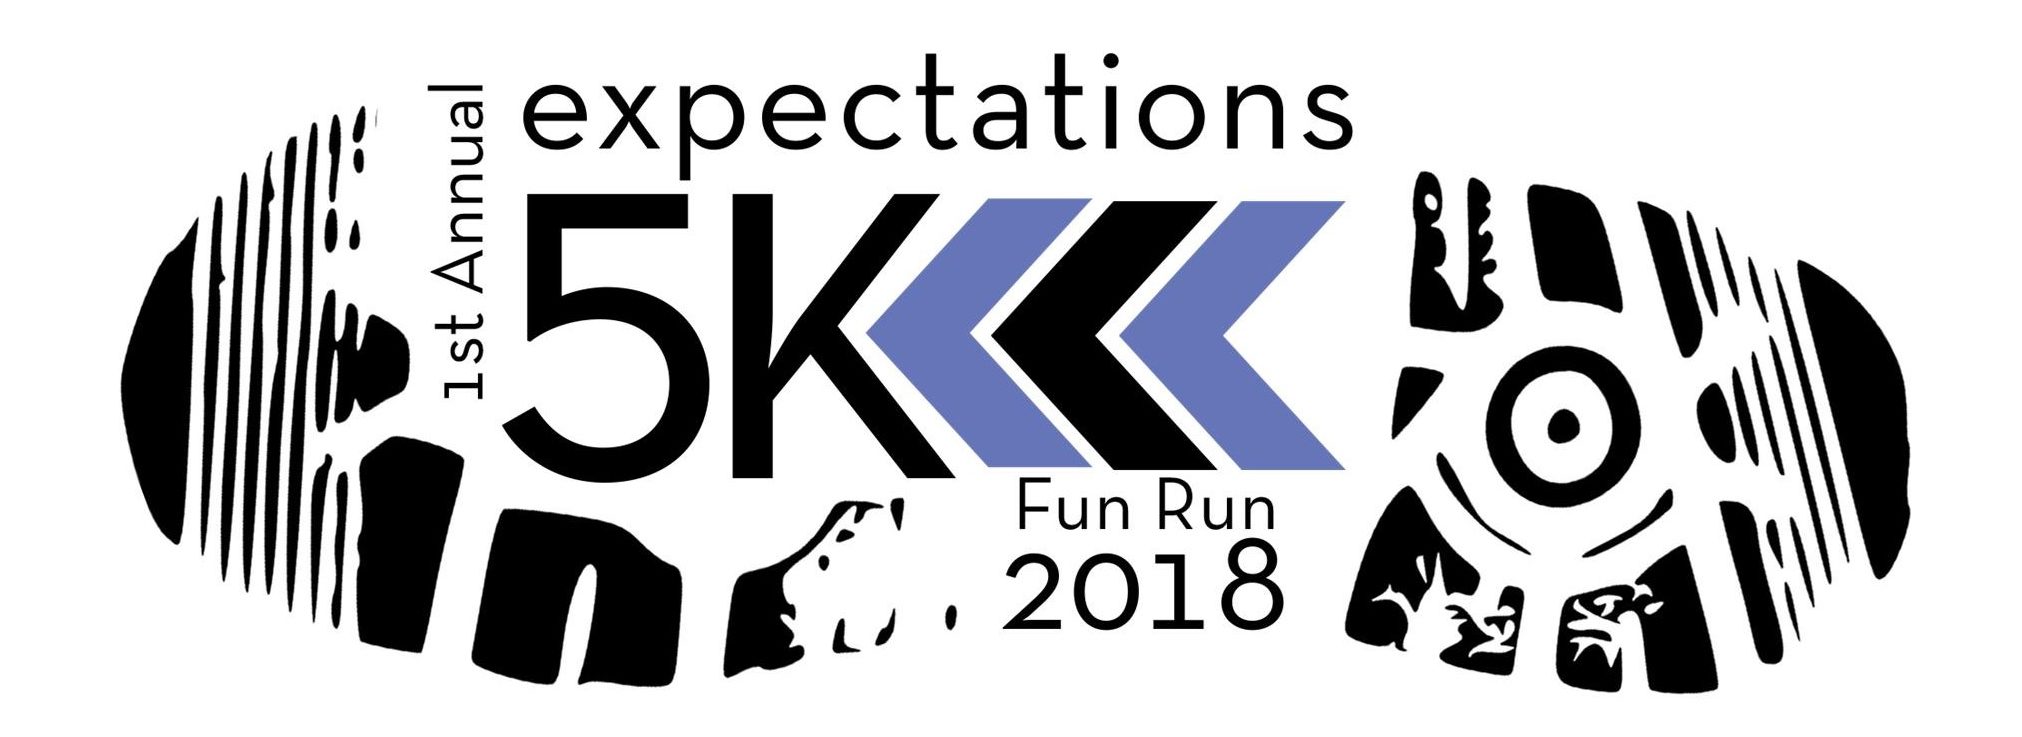 Expectations 5k and fun run logo black